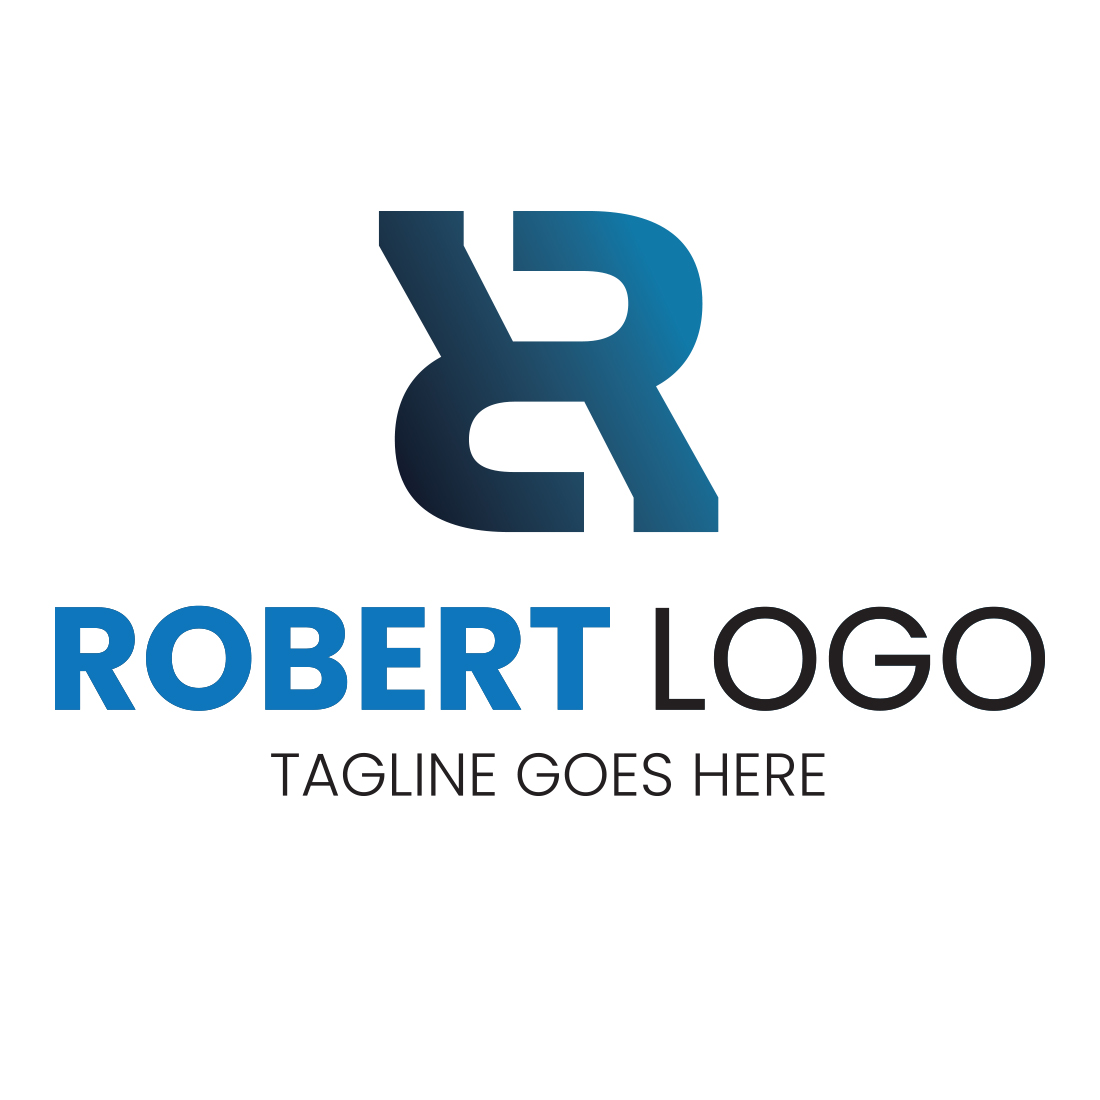 R letter logo cover image.